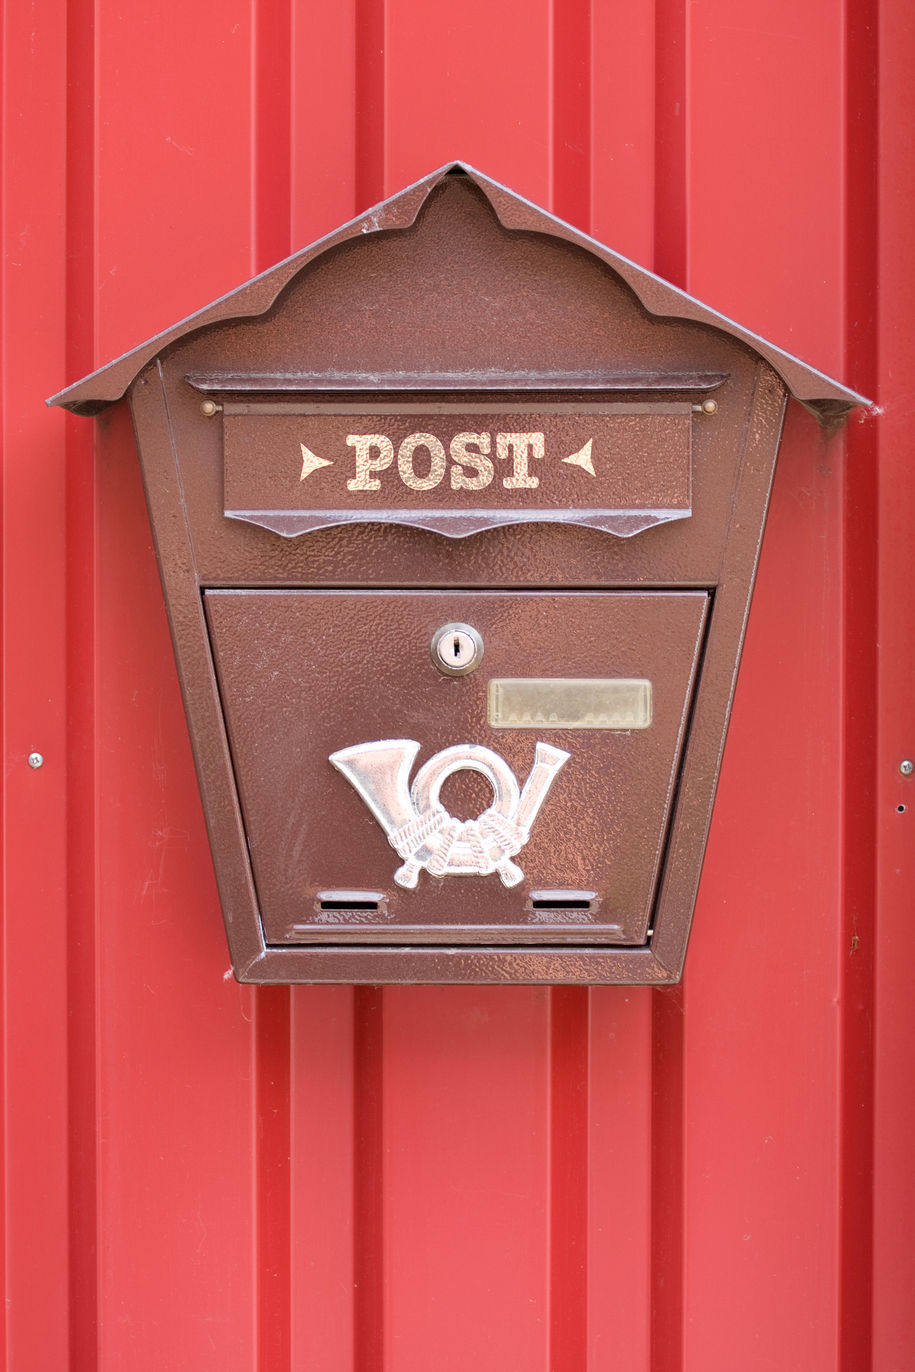 Postkasse